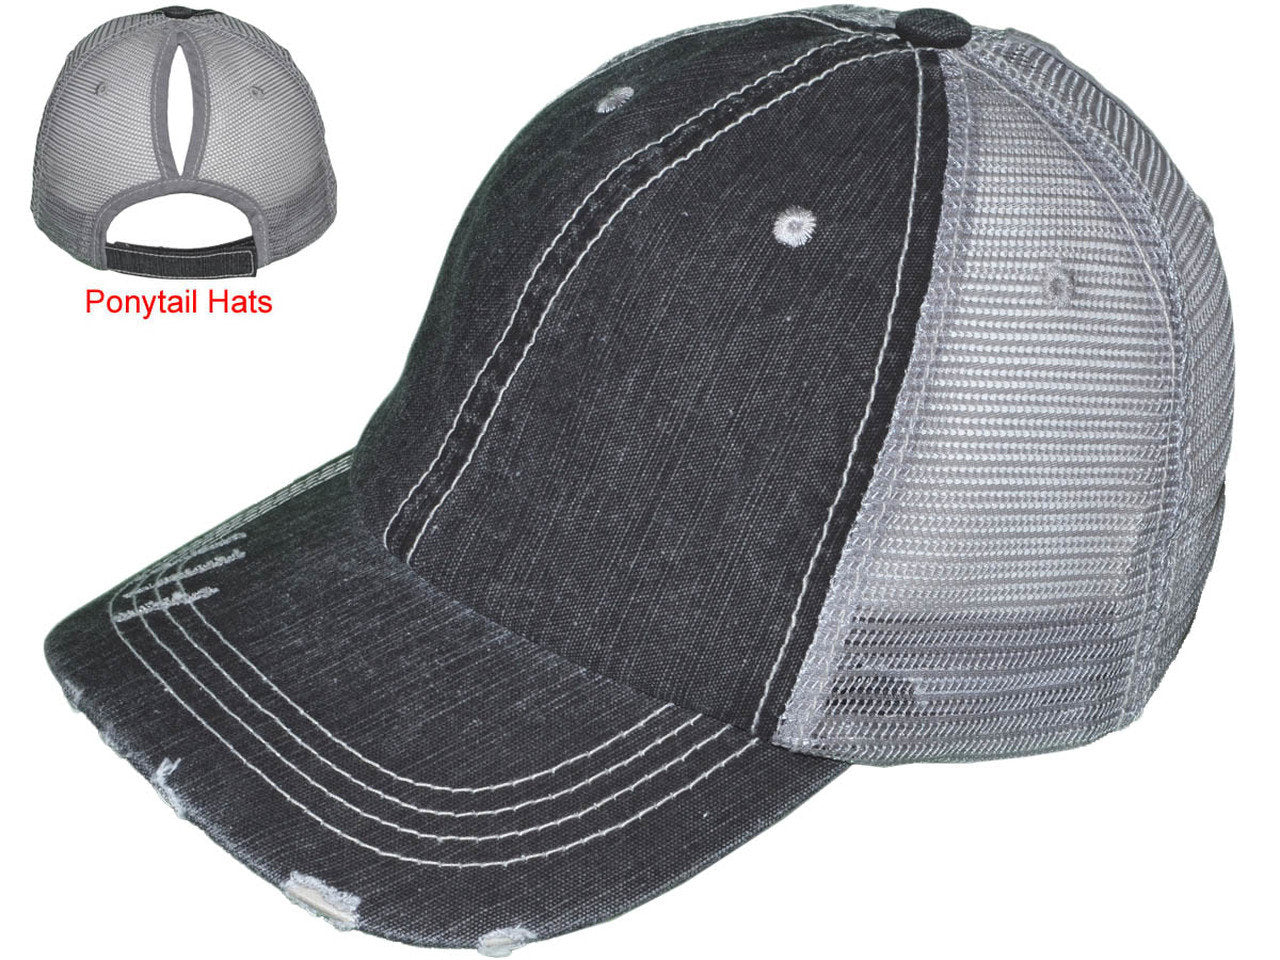 Nebraska Hat - Distressed Ponytail or Messy Bun Hat  - Many Fabric Choices